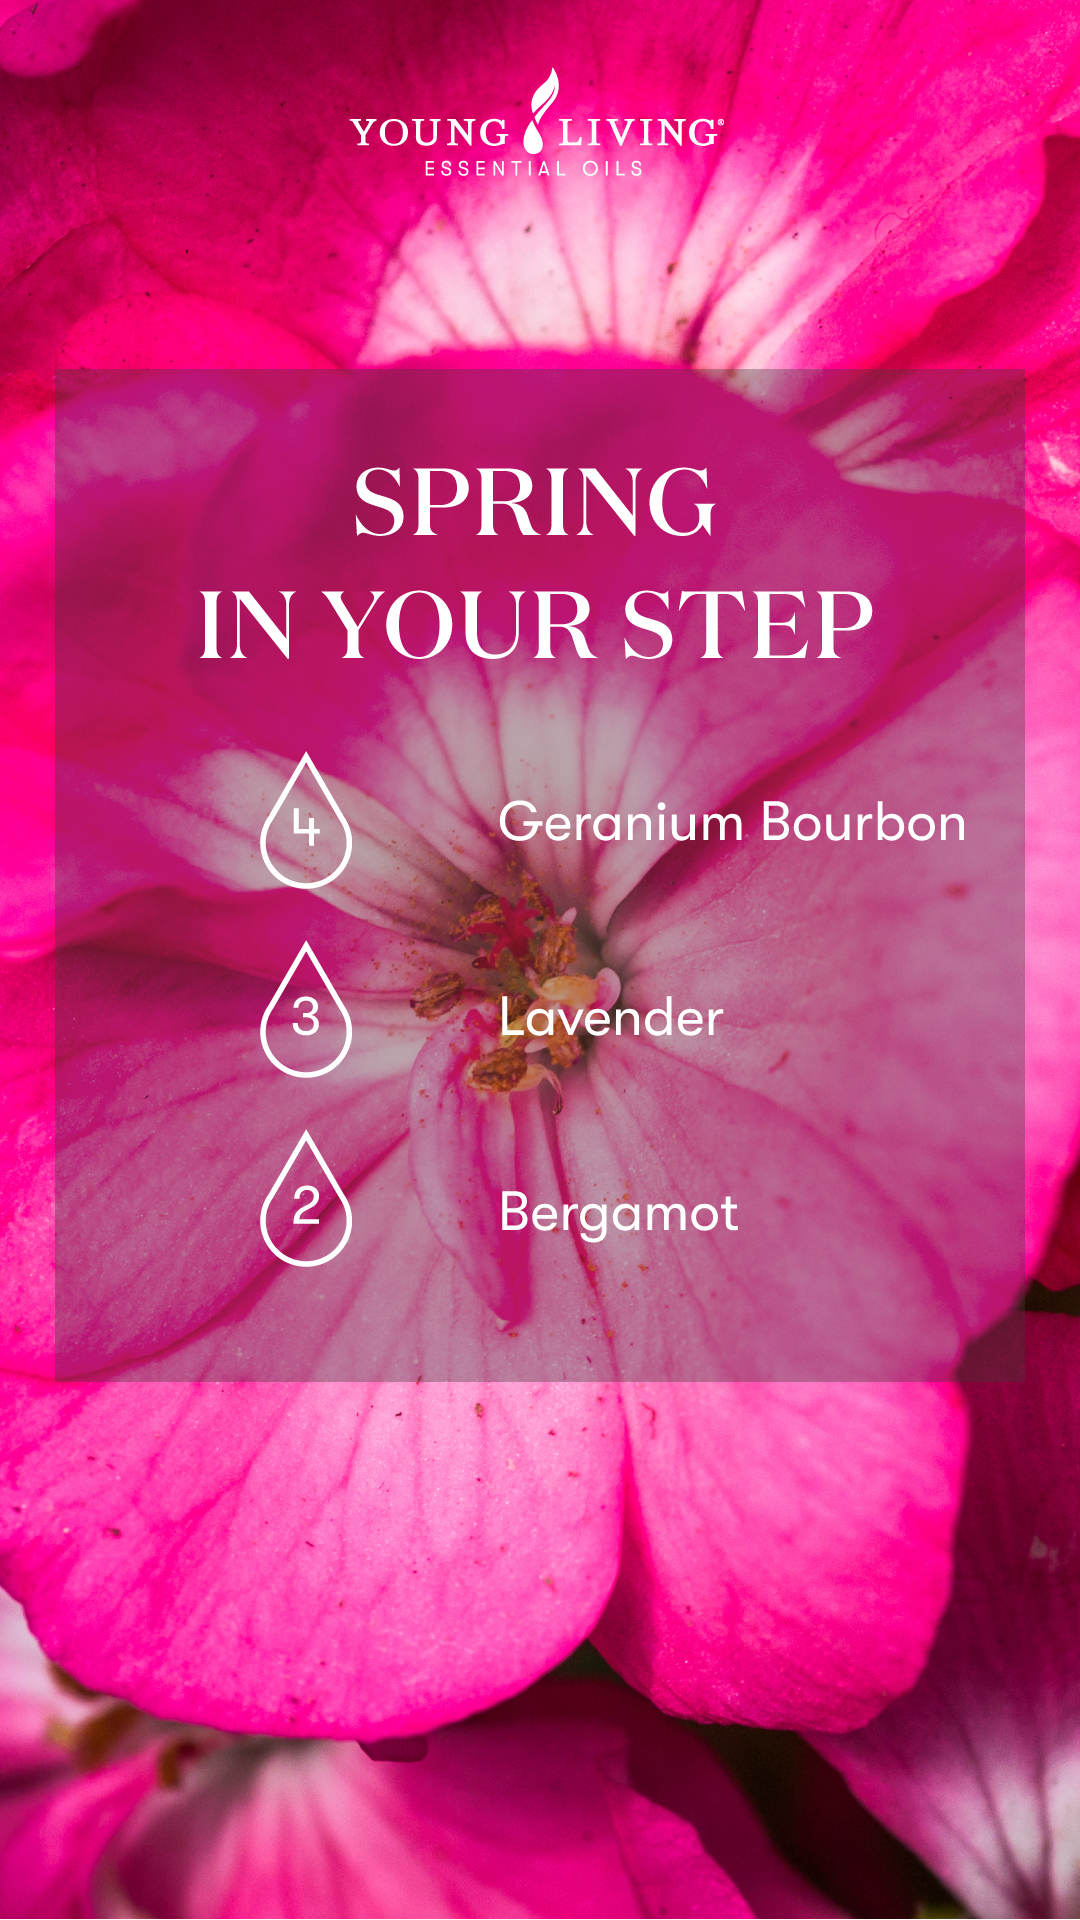 Spring In Your Step diffuser blend - - 4 drops Geranium Bourbon essential oil 3 drops Lavender essential oil 2 drops Bergamot essential oil - Young Living Lavender Life Blog 